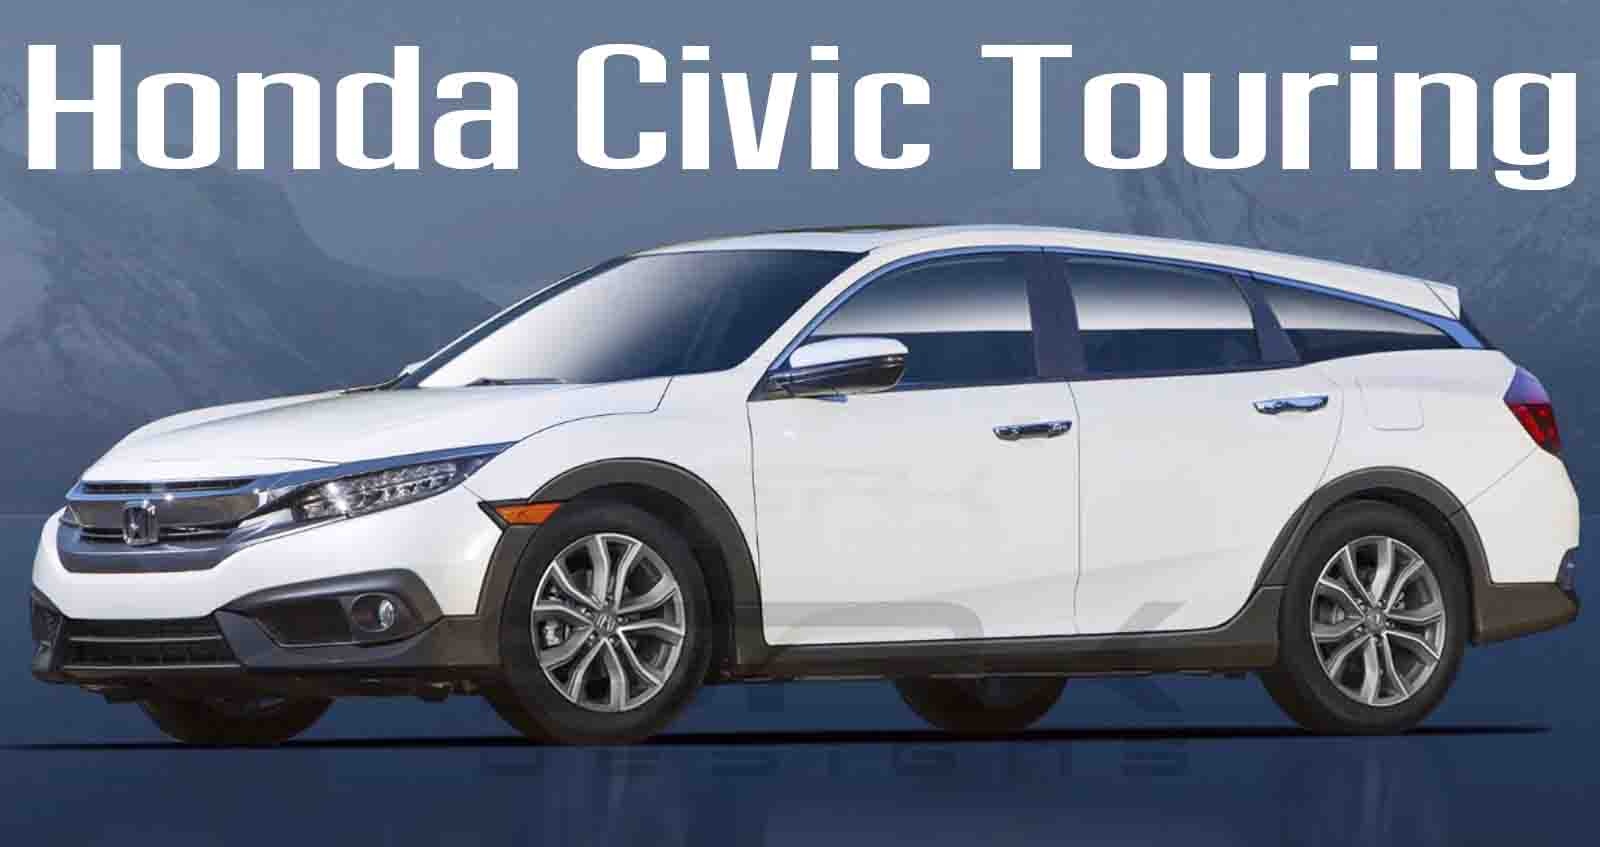 Honda Civic Touring หลังยาวขึ้น โดย SRK Design